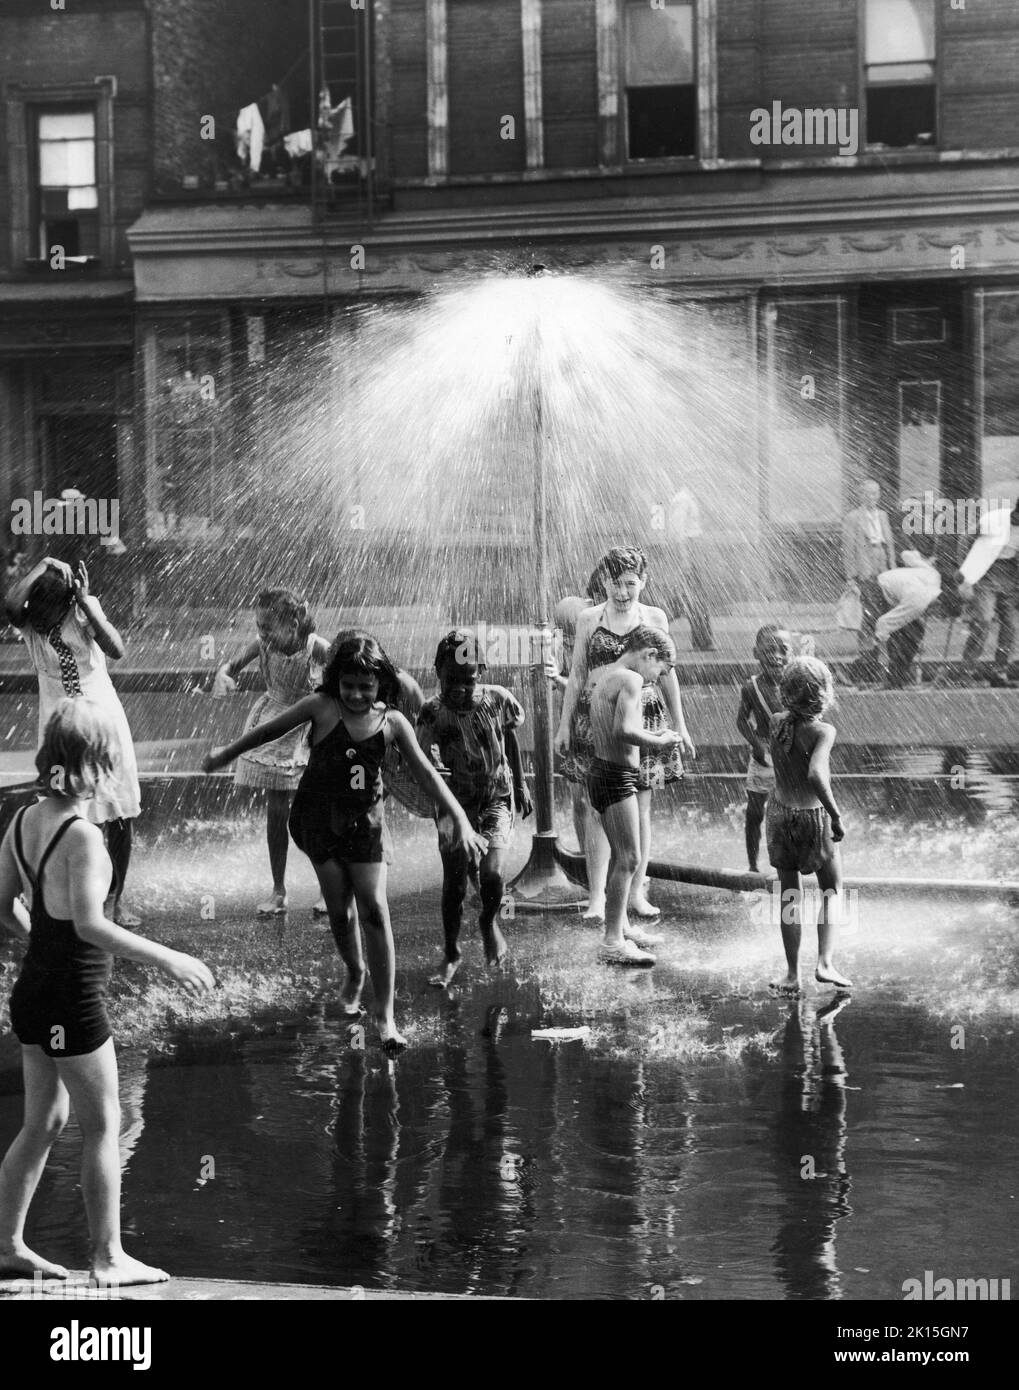 Children cooling off under an urban sprinkler in New York City, 1954. Stock Photo